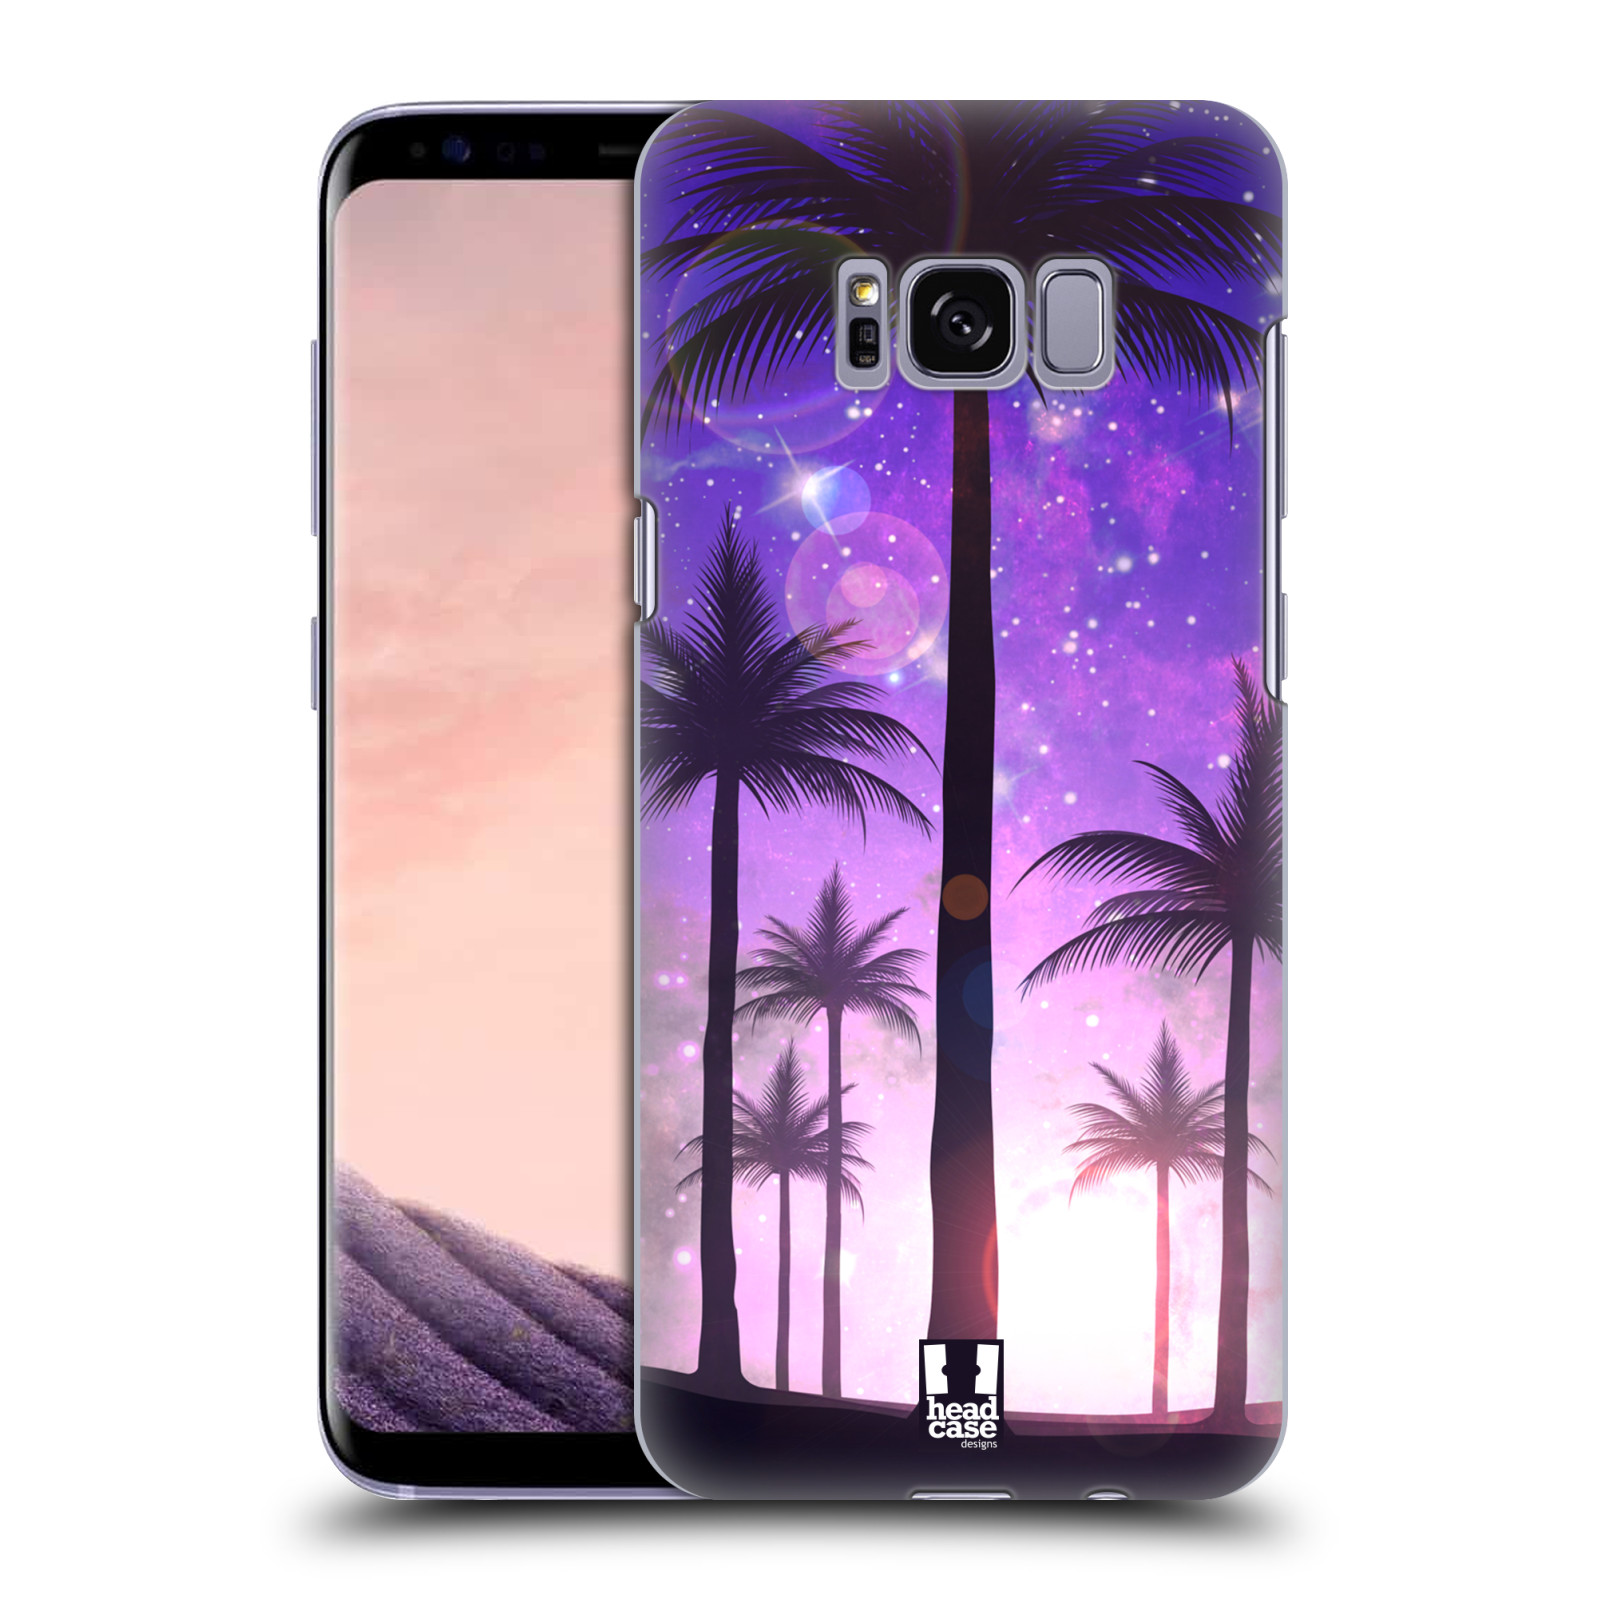 HEAD CASE plastový obal na mobil Samsung Galaxy S8 vzor Kreslený motiv silueta moře a palmy FIALOVÁ